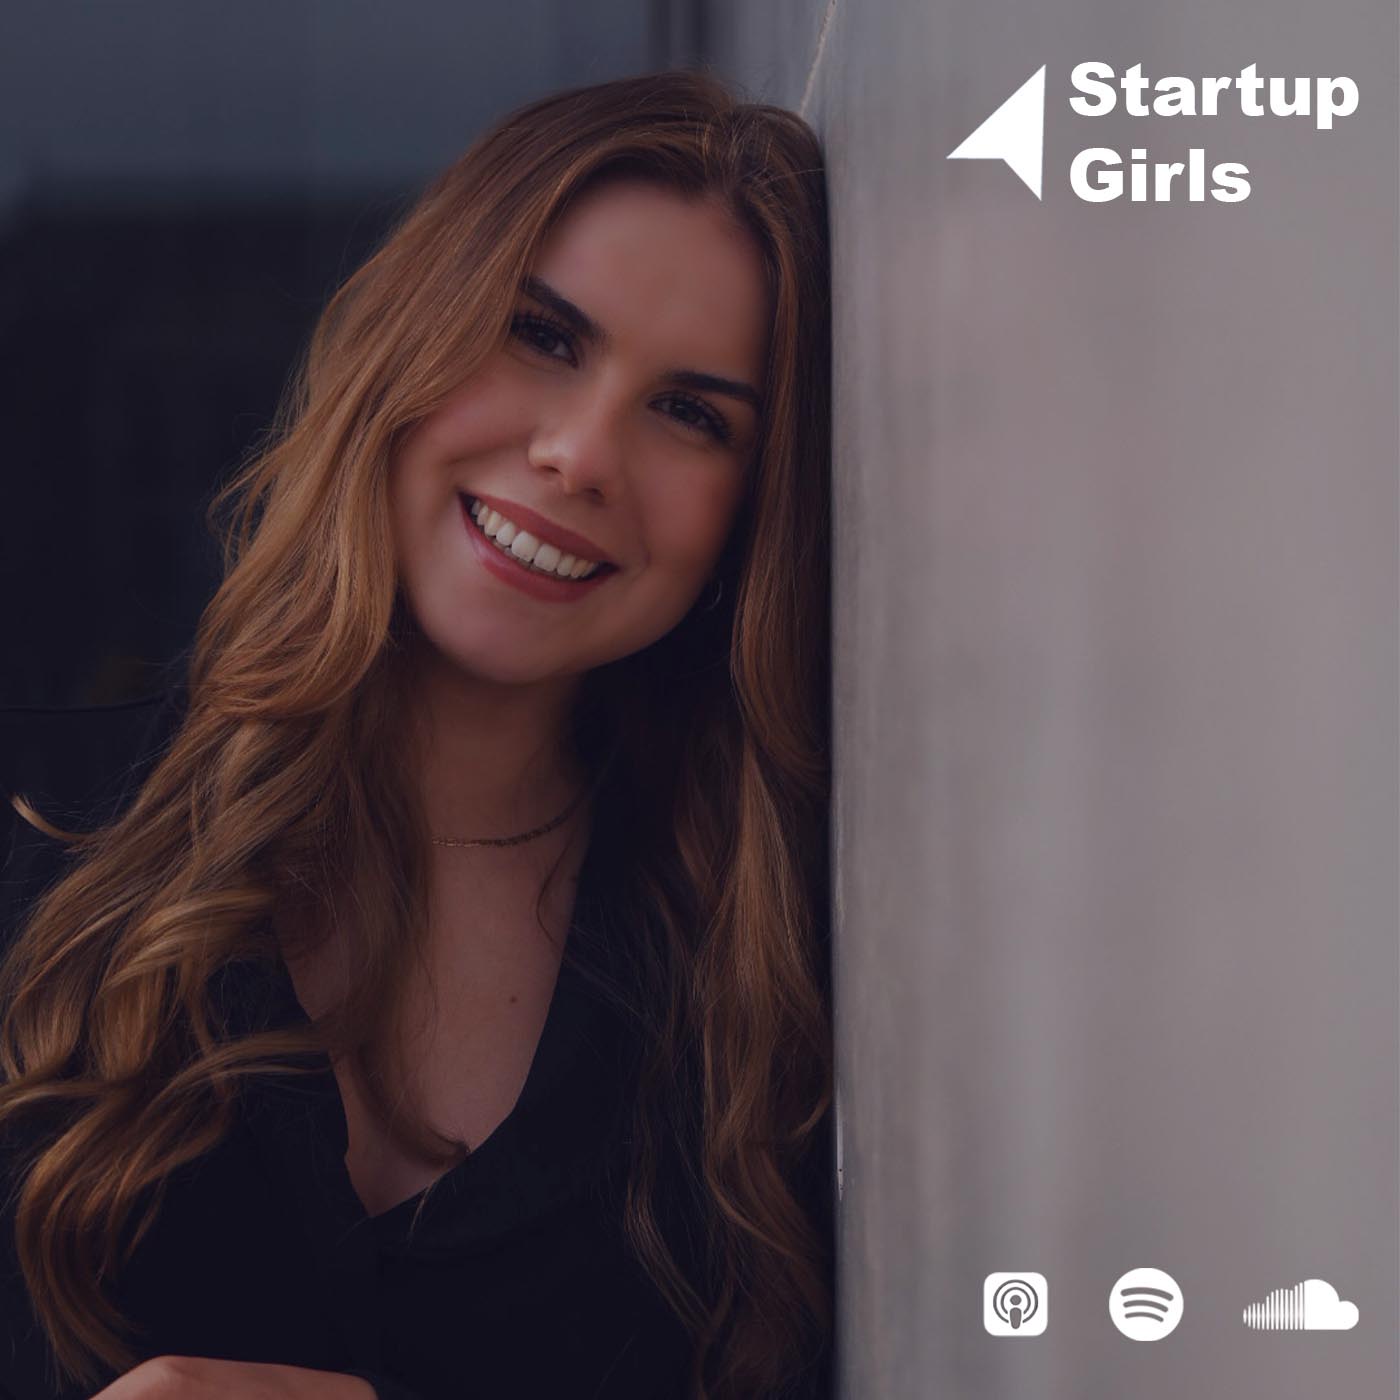 Startup Girls